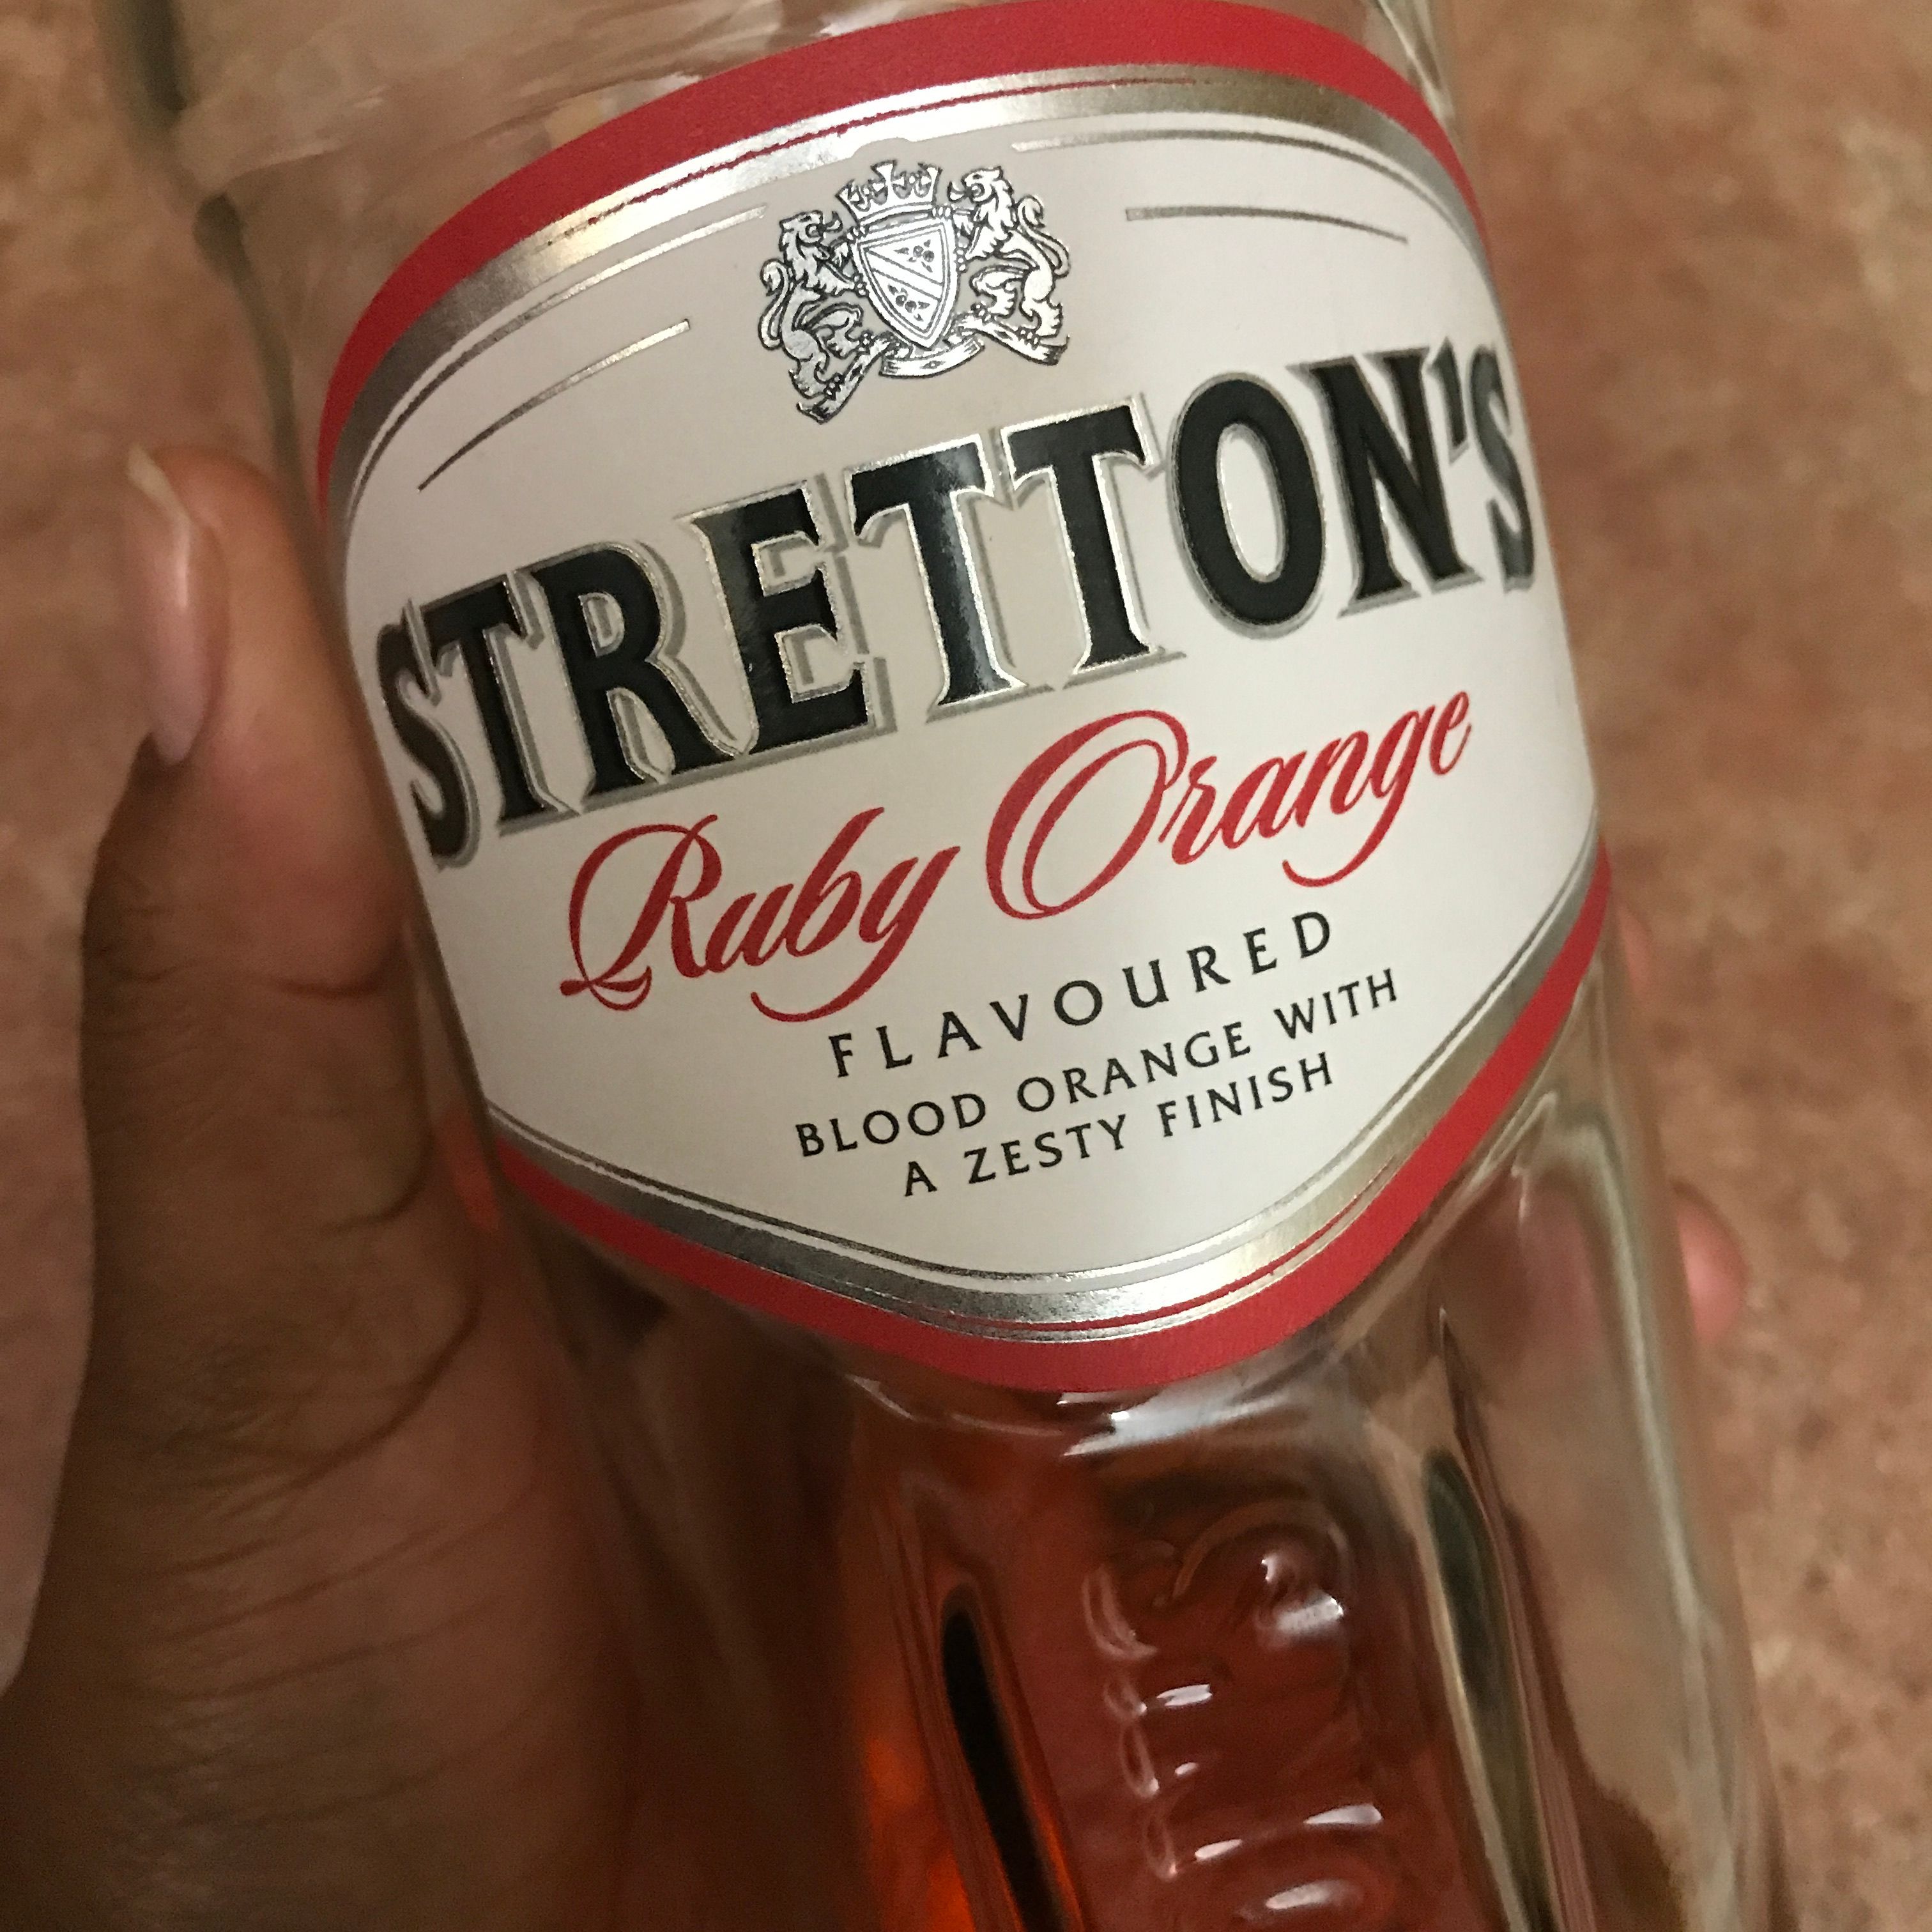 NEW STRETTON’S flavour